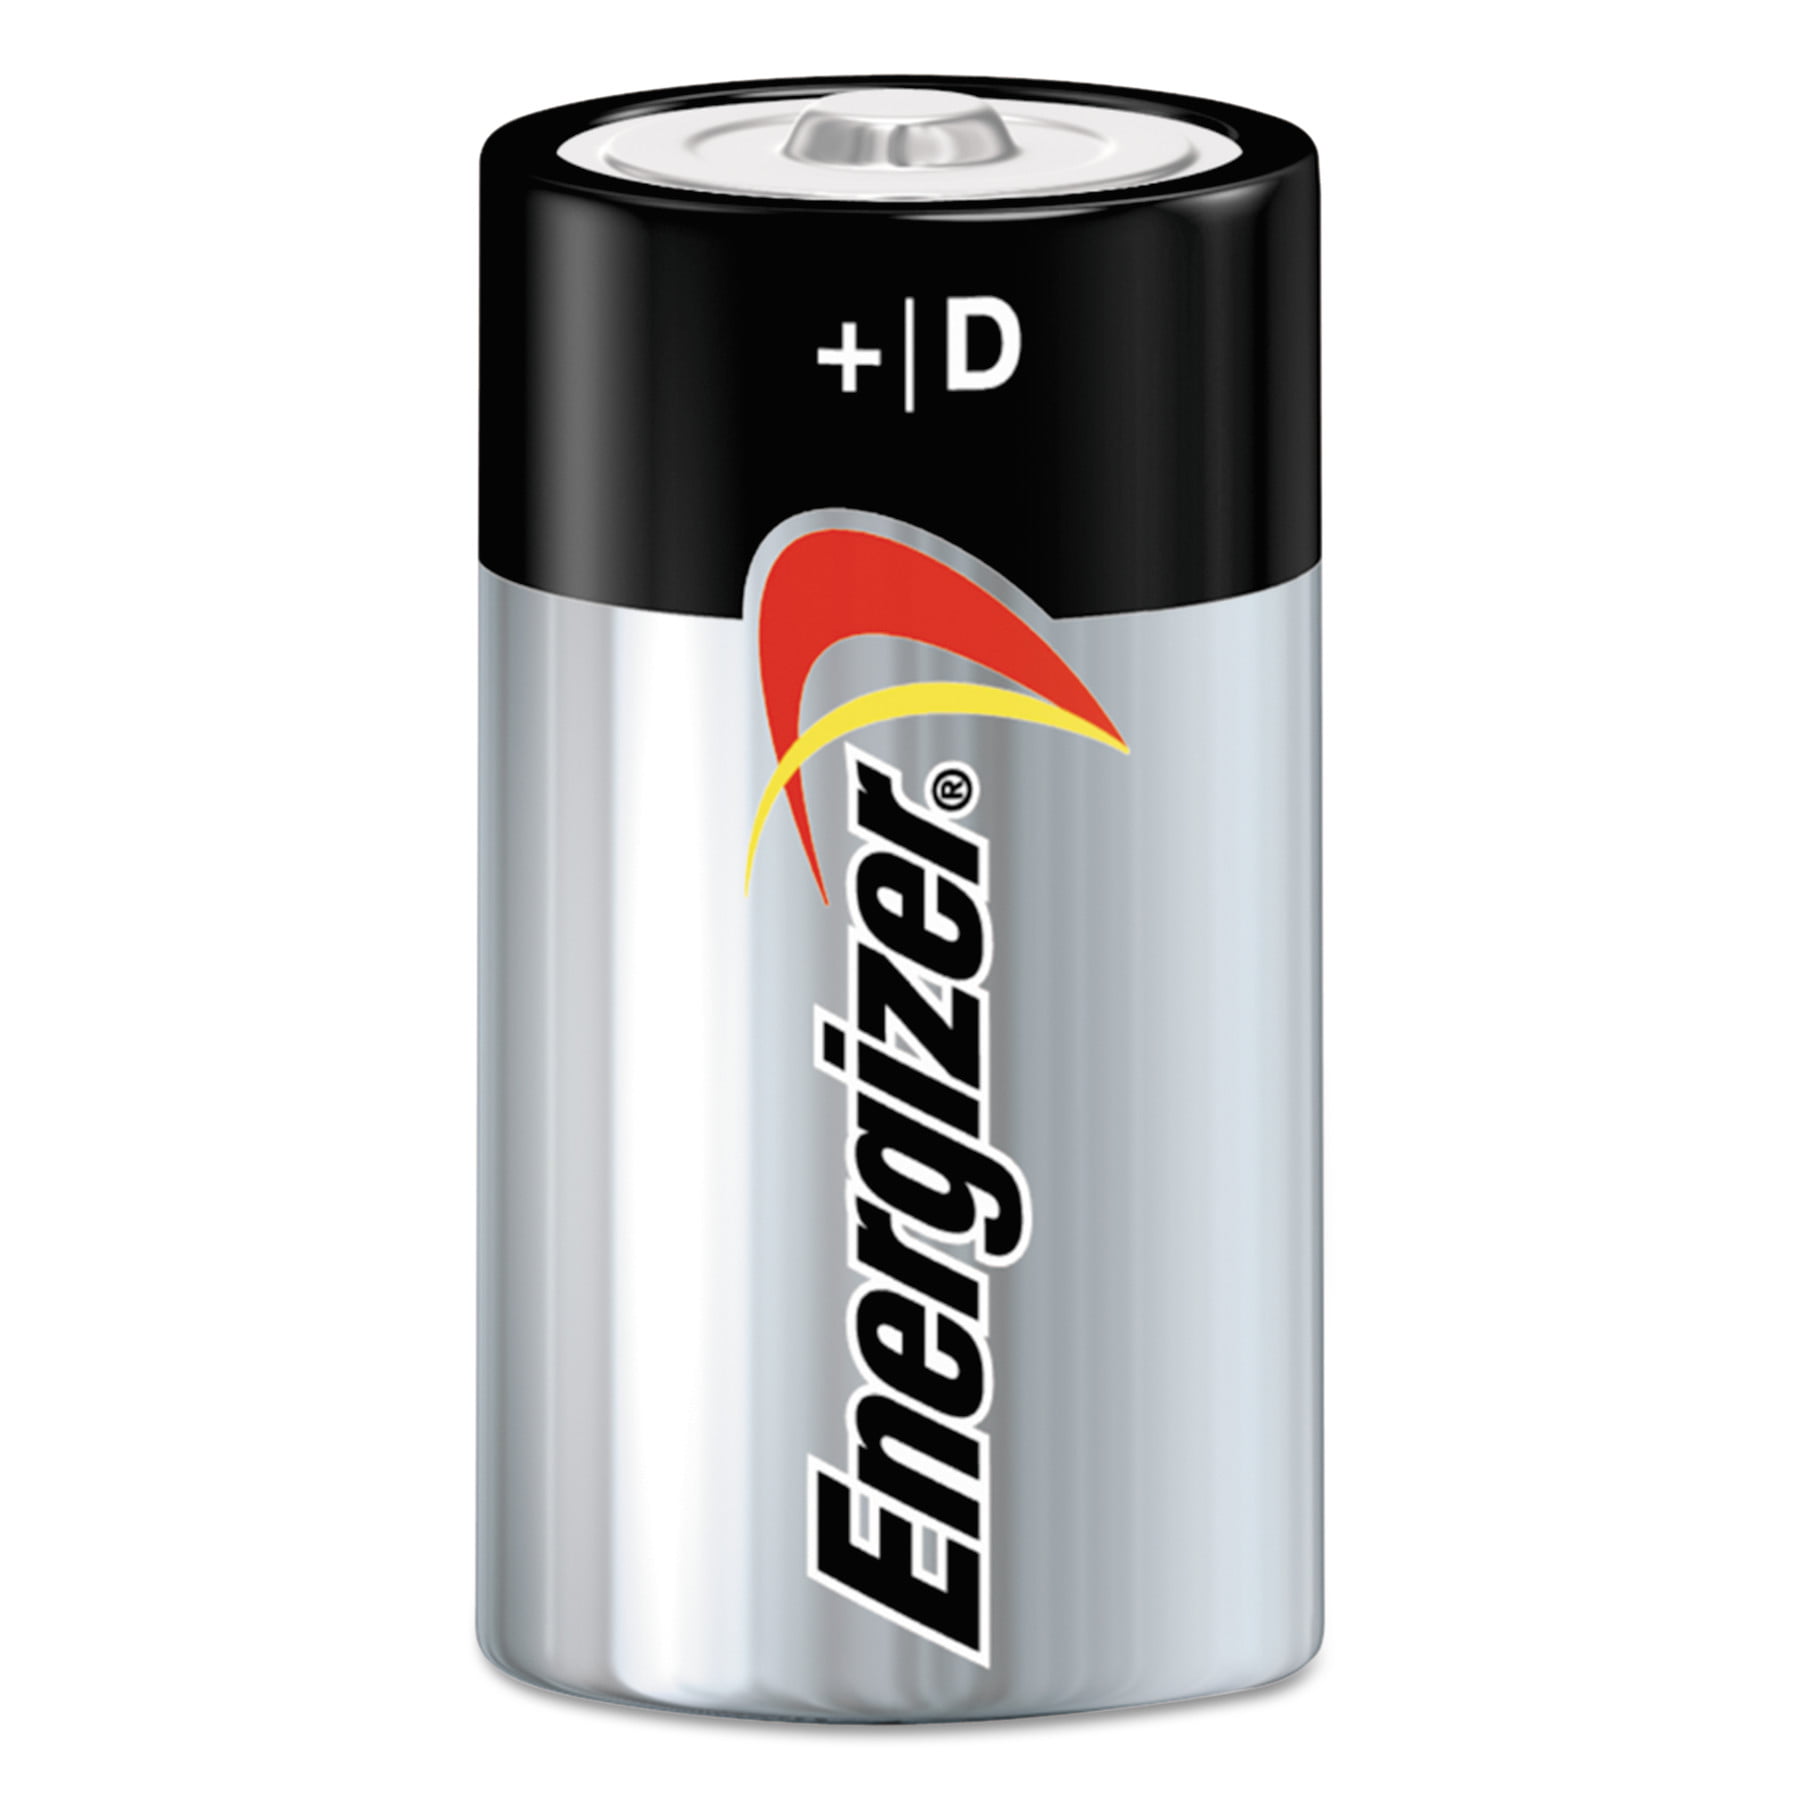 D batteries. Батарейка Energizer lr20. Energizer lr14 bl2. Батарейка d Energizer lr20 Max (2-BL) (24). Щелочная батарейка lr20 d Max 1.5в бл/2 Energizer.